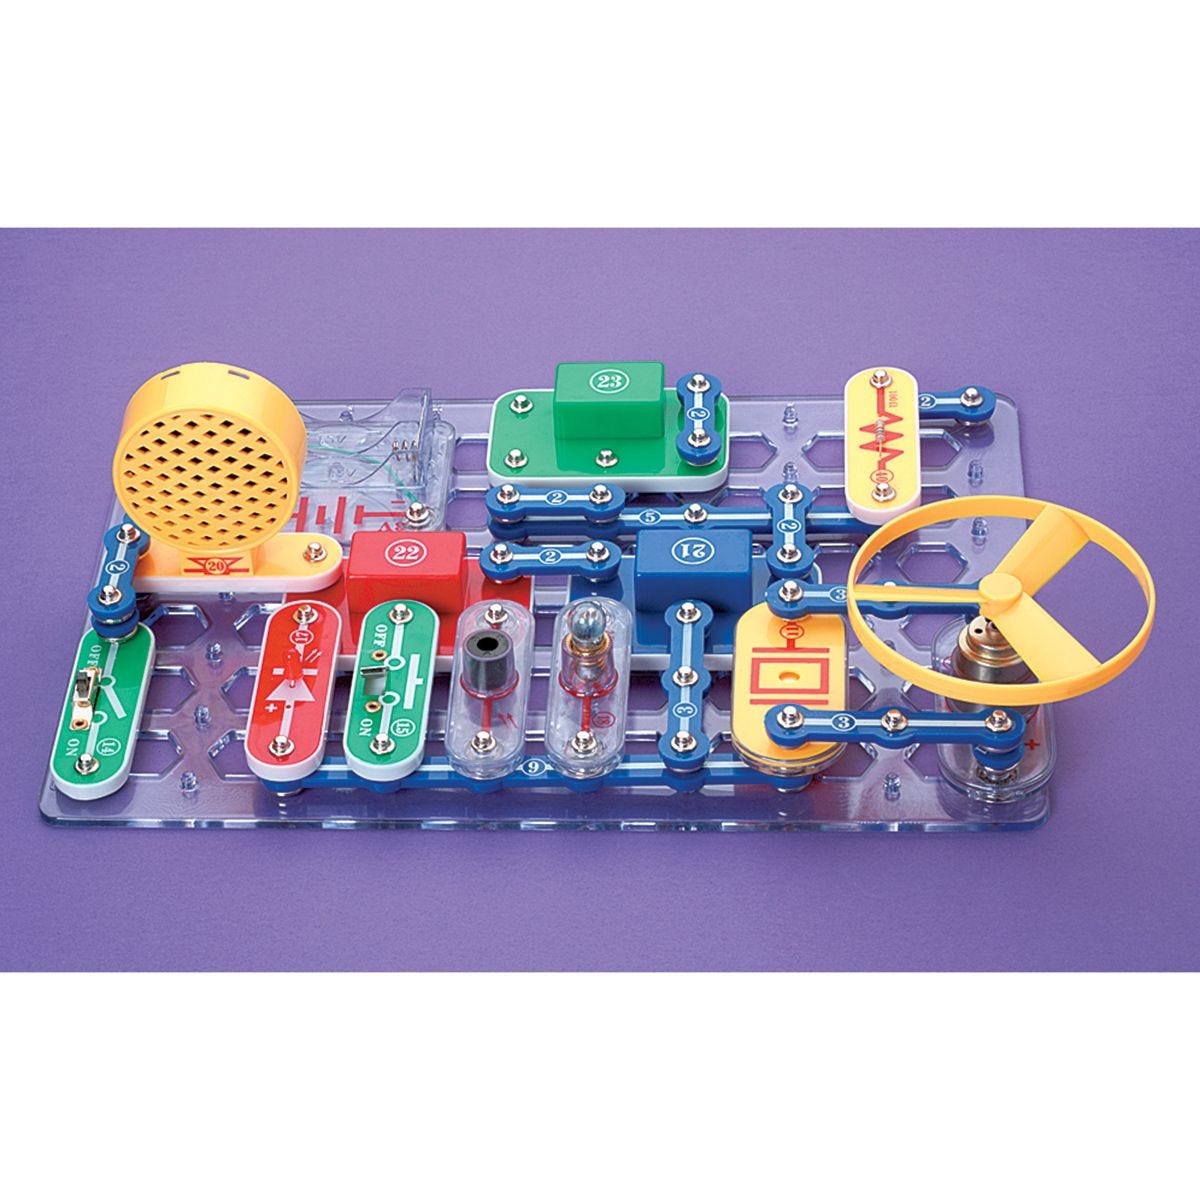 Snap Circuits Jr 100 Electronics Kit for Kids